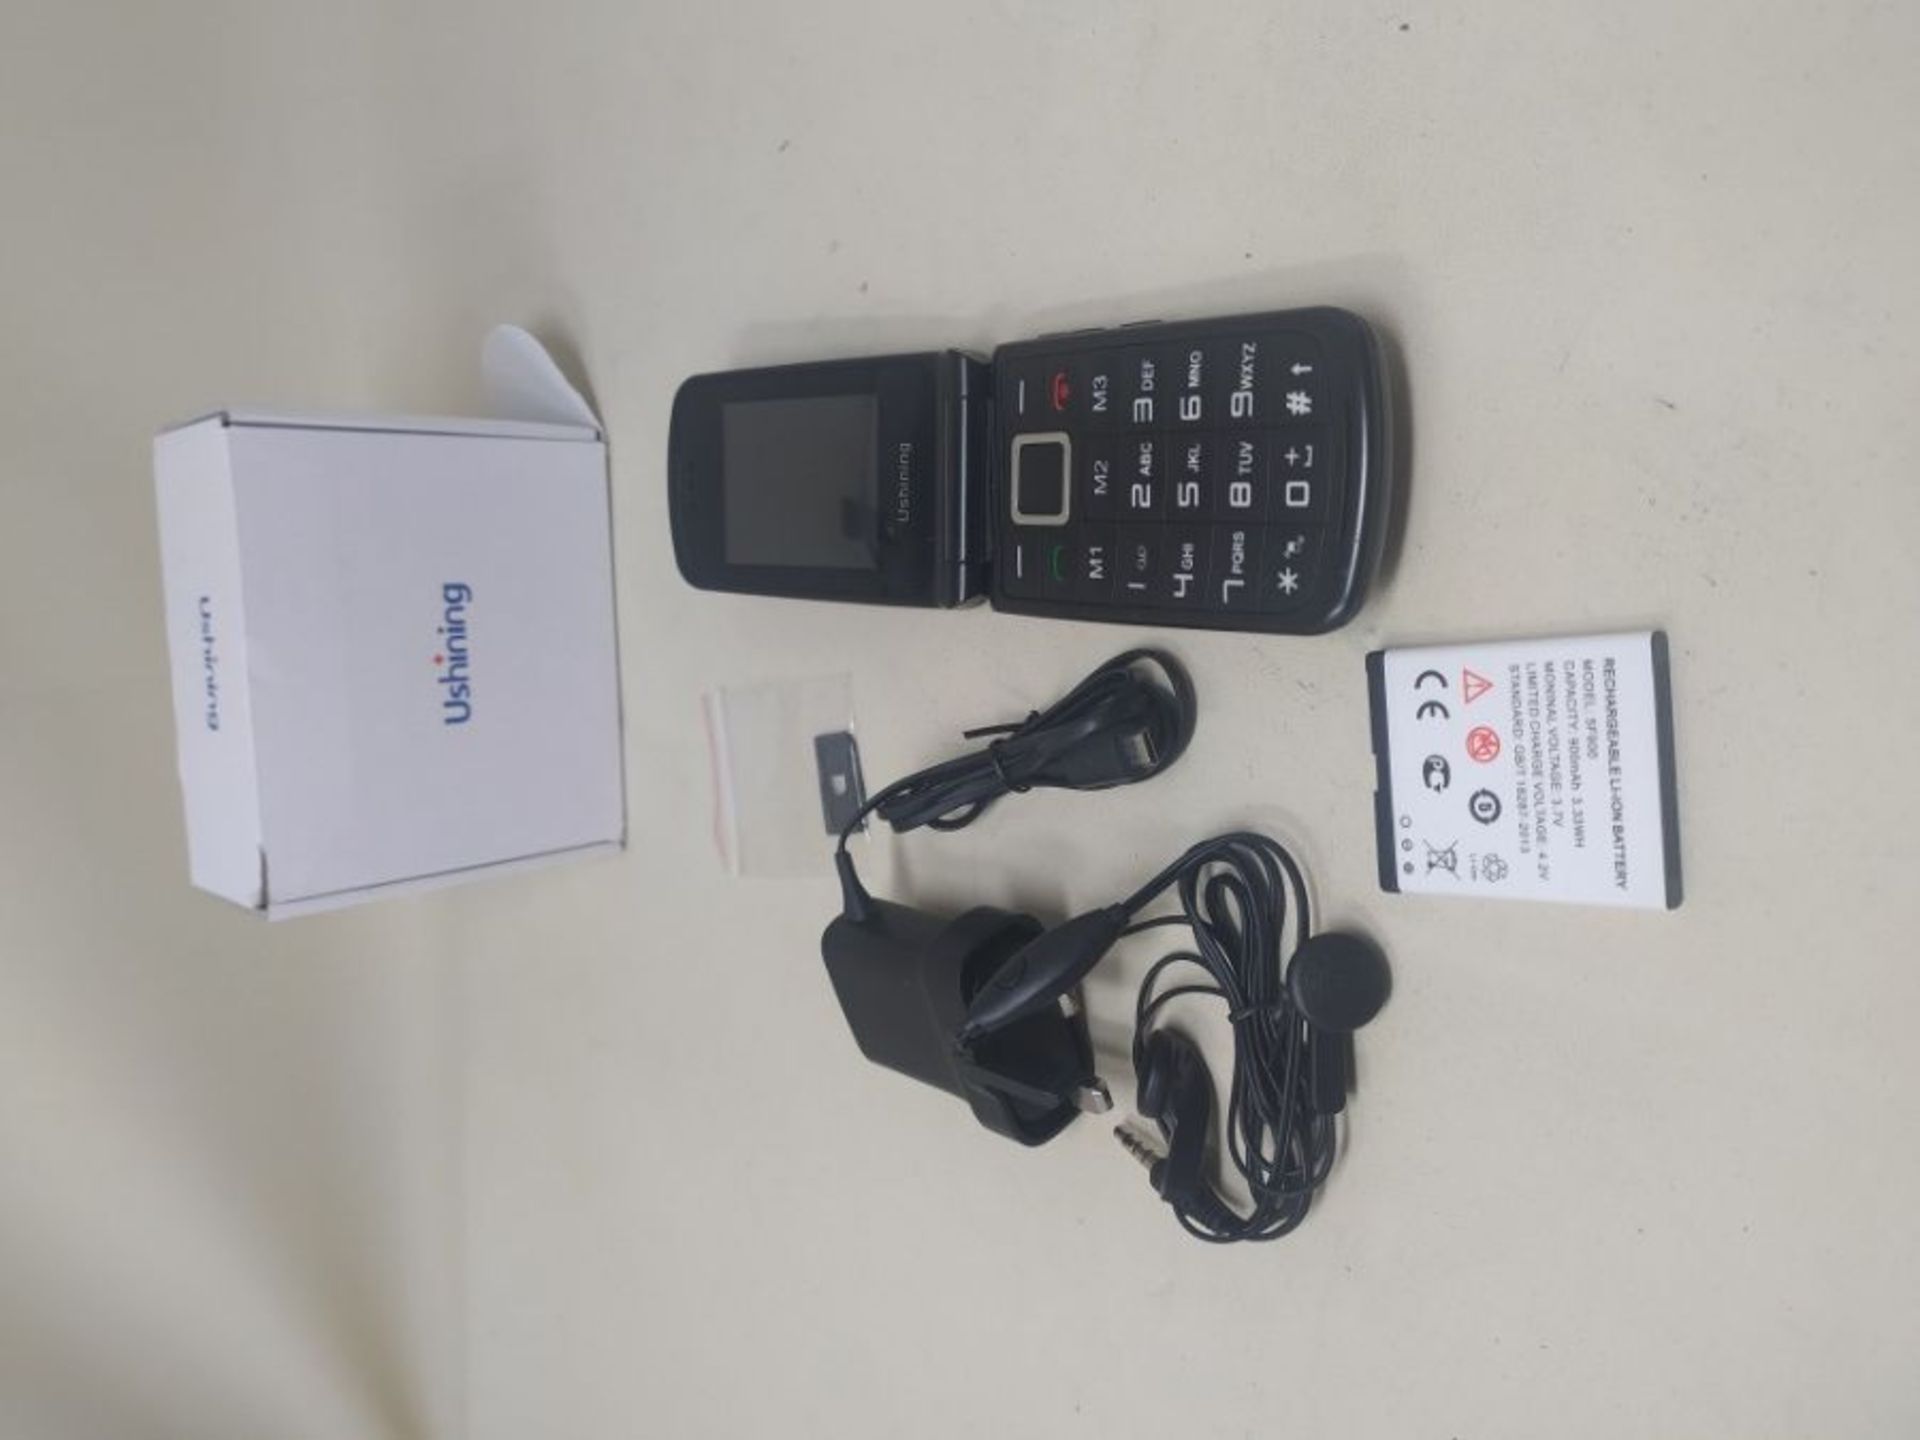 Ukuu 3G Big Button Basic Mobile Phones Unlocked, Dual Sim Free Flip Mobile Phone with - Image 2 of 2